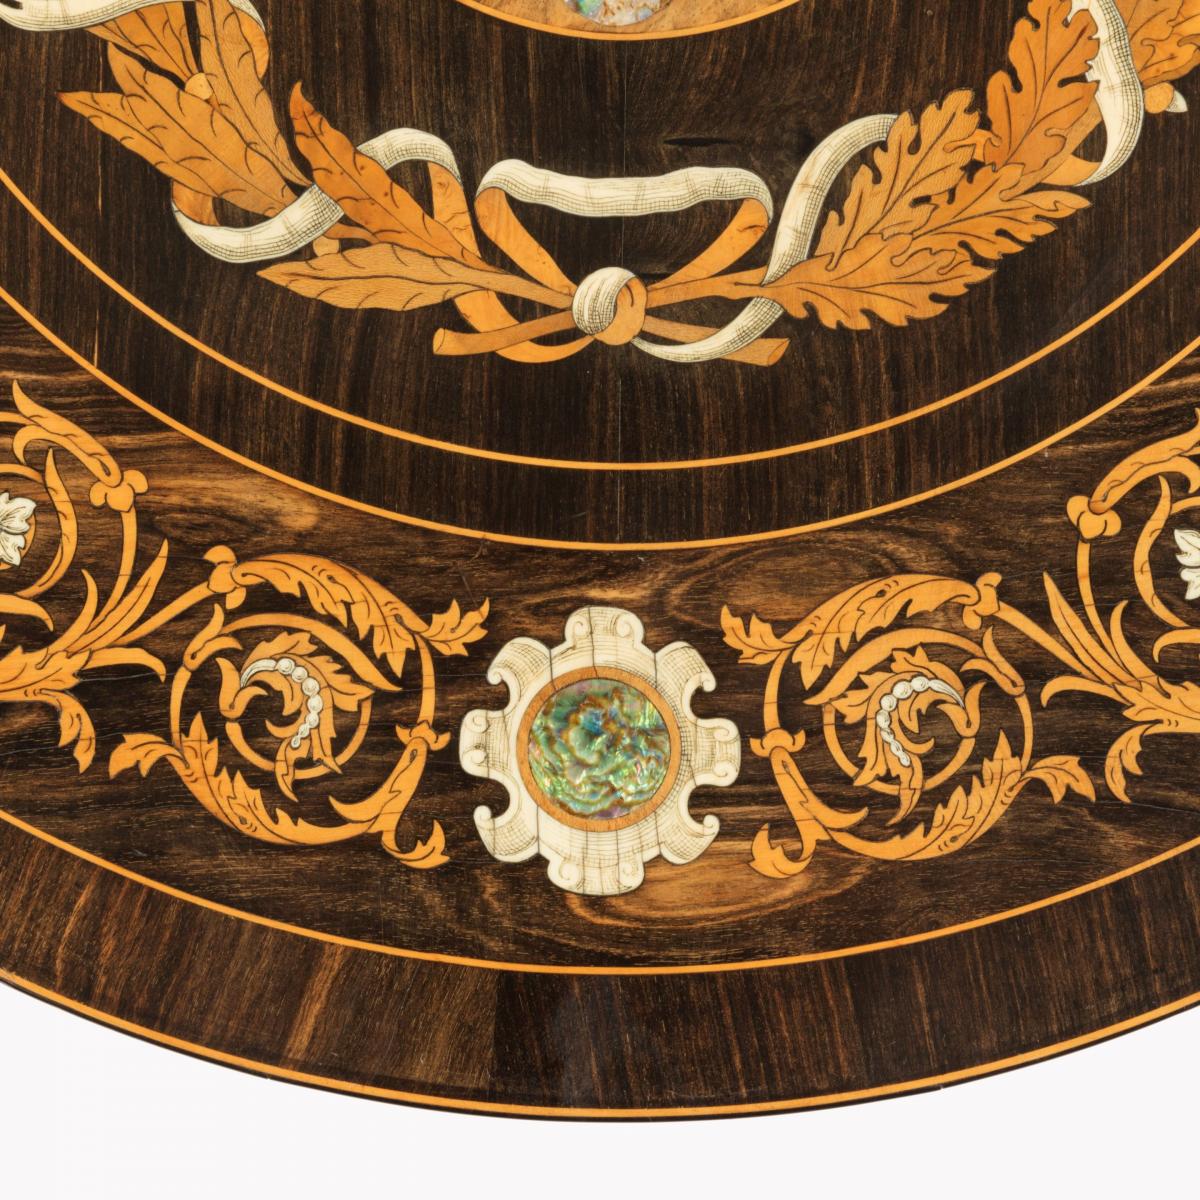 Decorative intarsia roundel in the Renaissance style